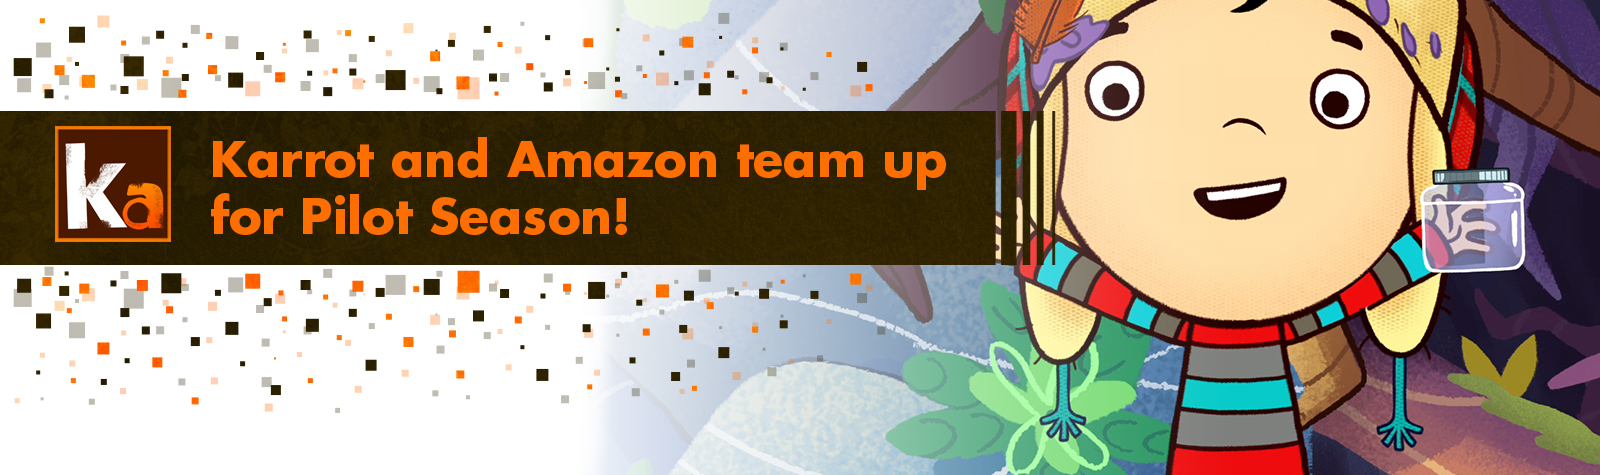 Karrot and Amazon team up for Pilot Season!